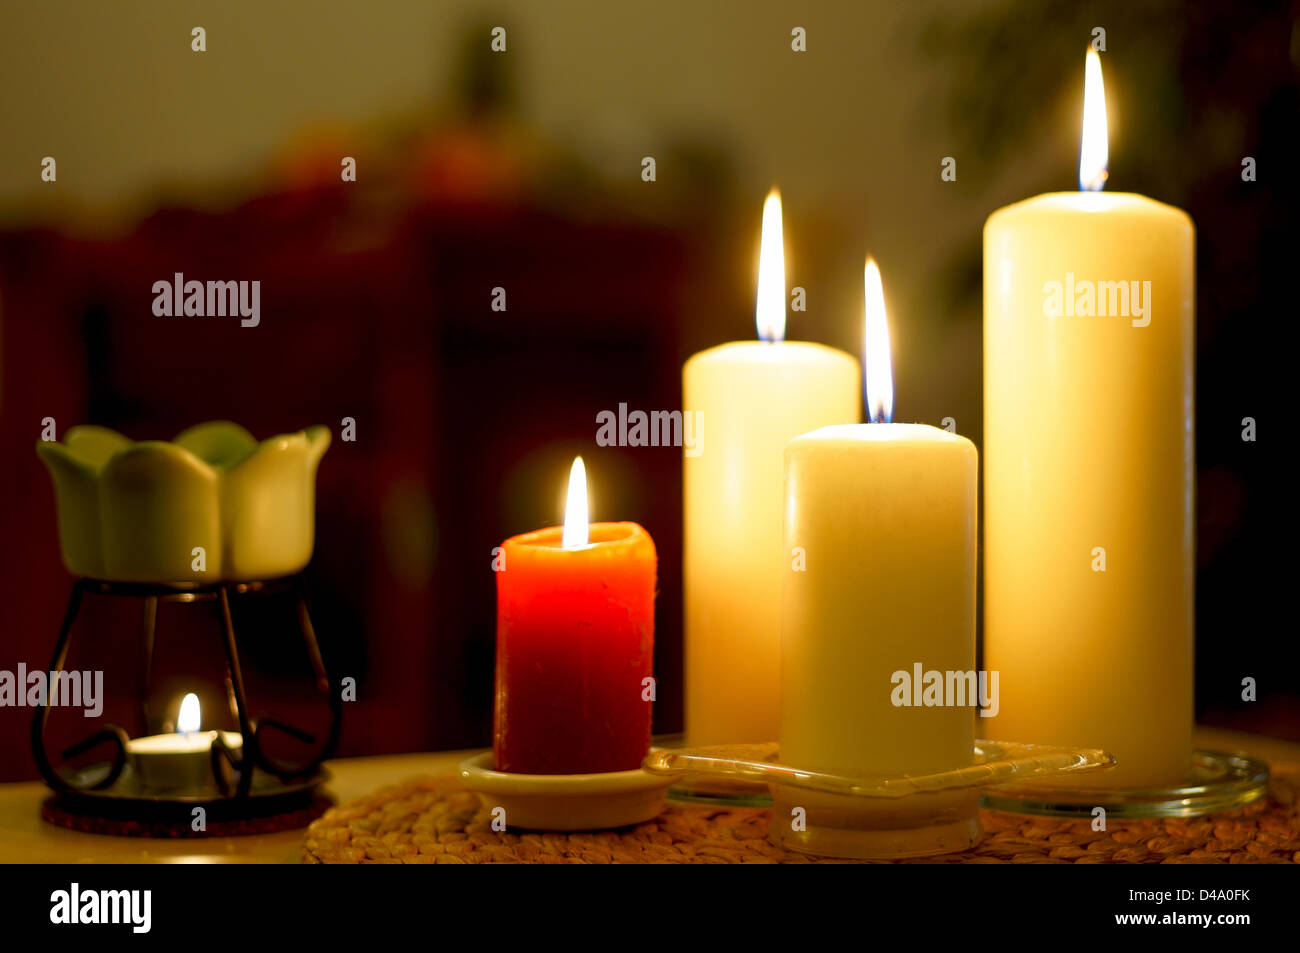 Candles burning homelike comfortable warm light Stock Photo